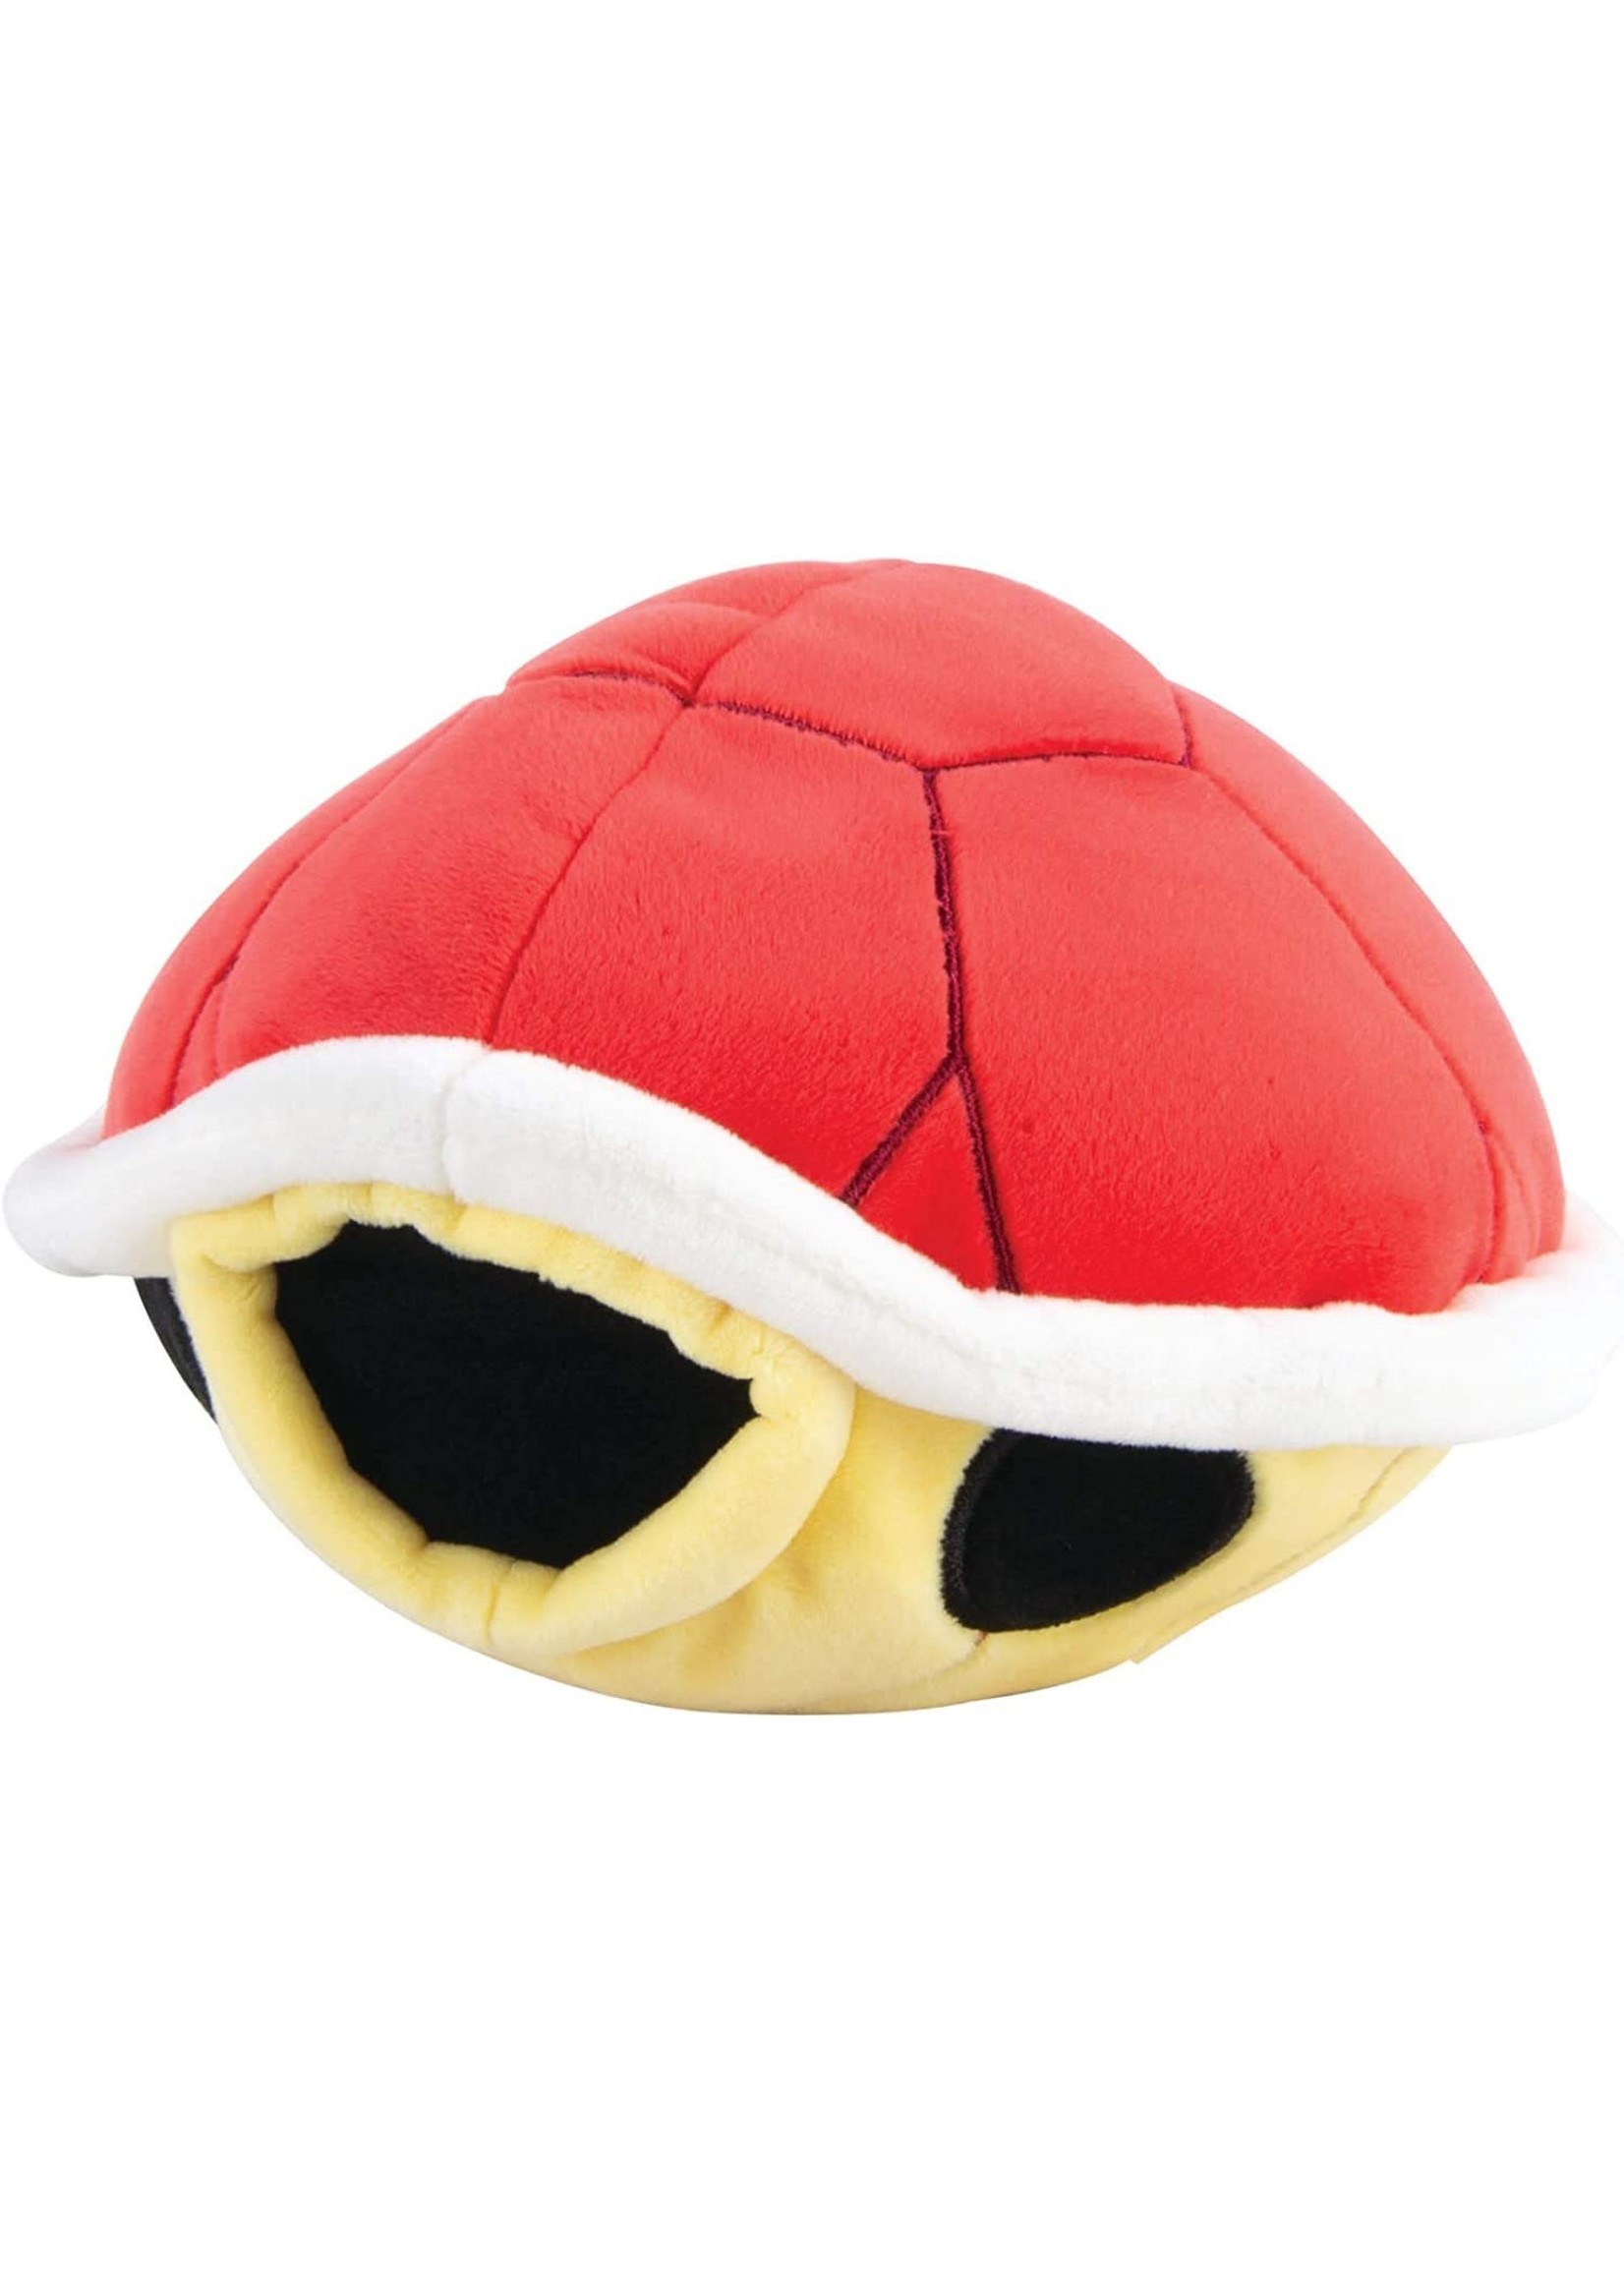 Nintendo Super Mario - Red shell